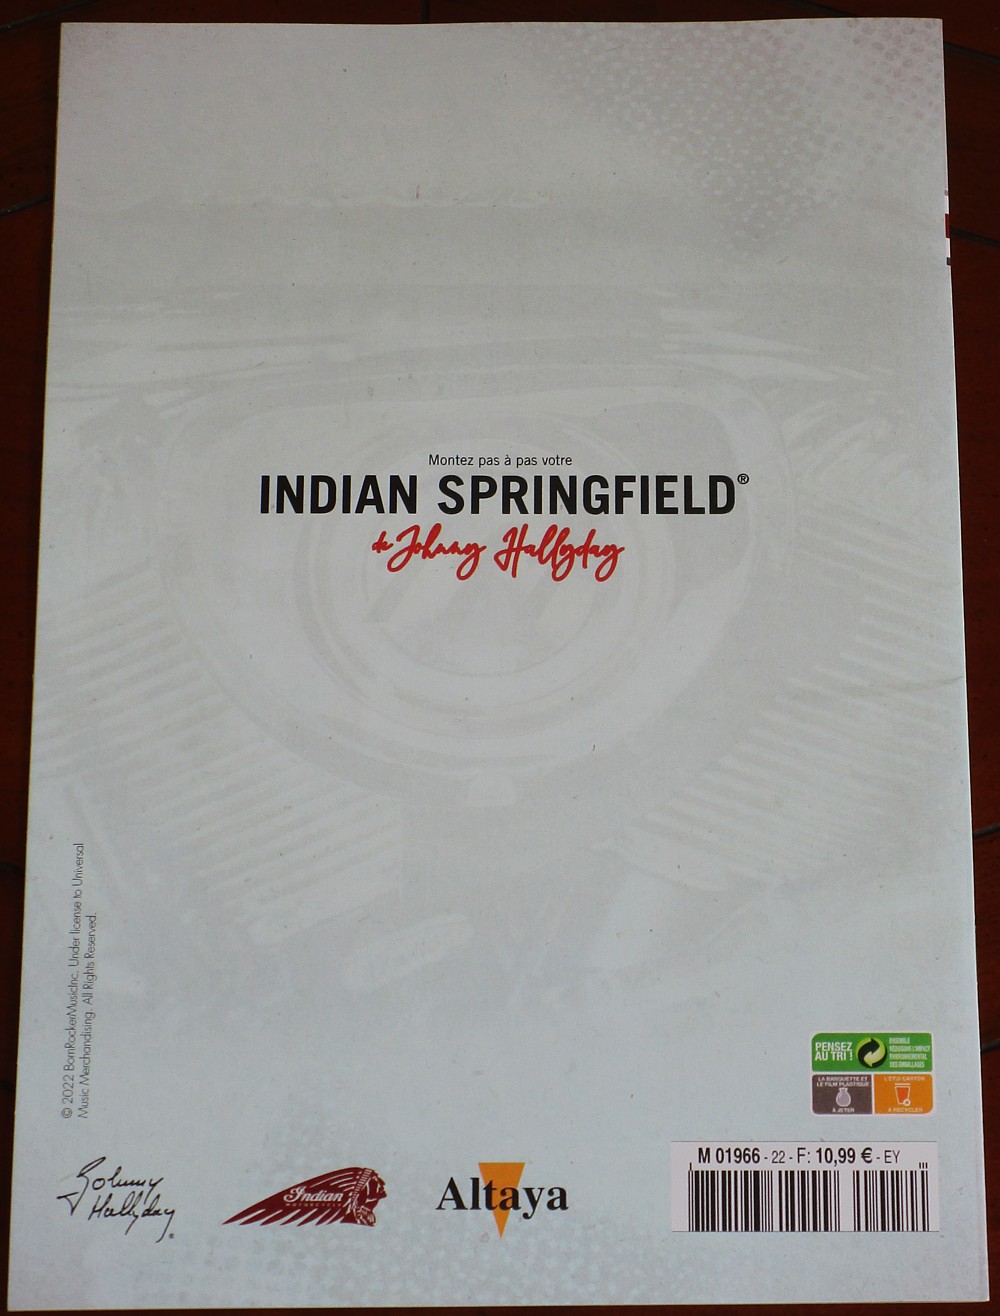 Altaya:Indian Springfield de JH n°22 024-al18